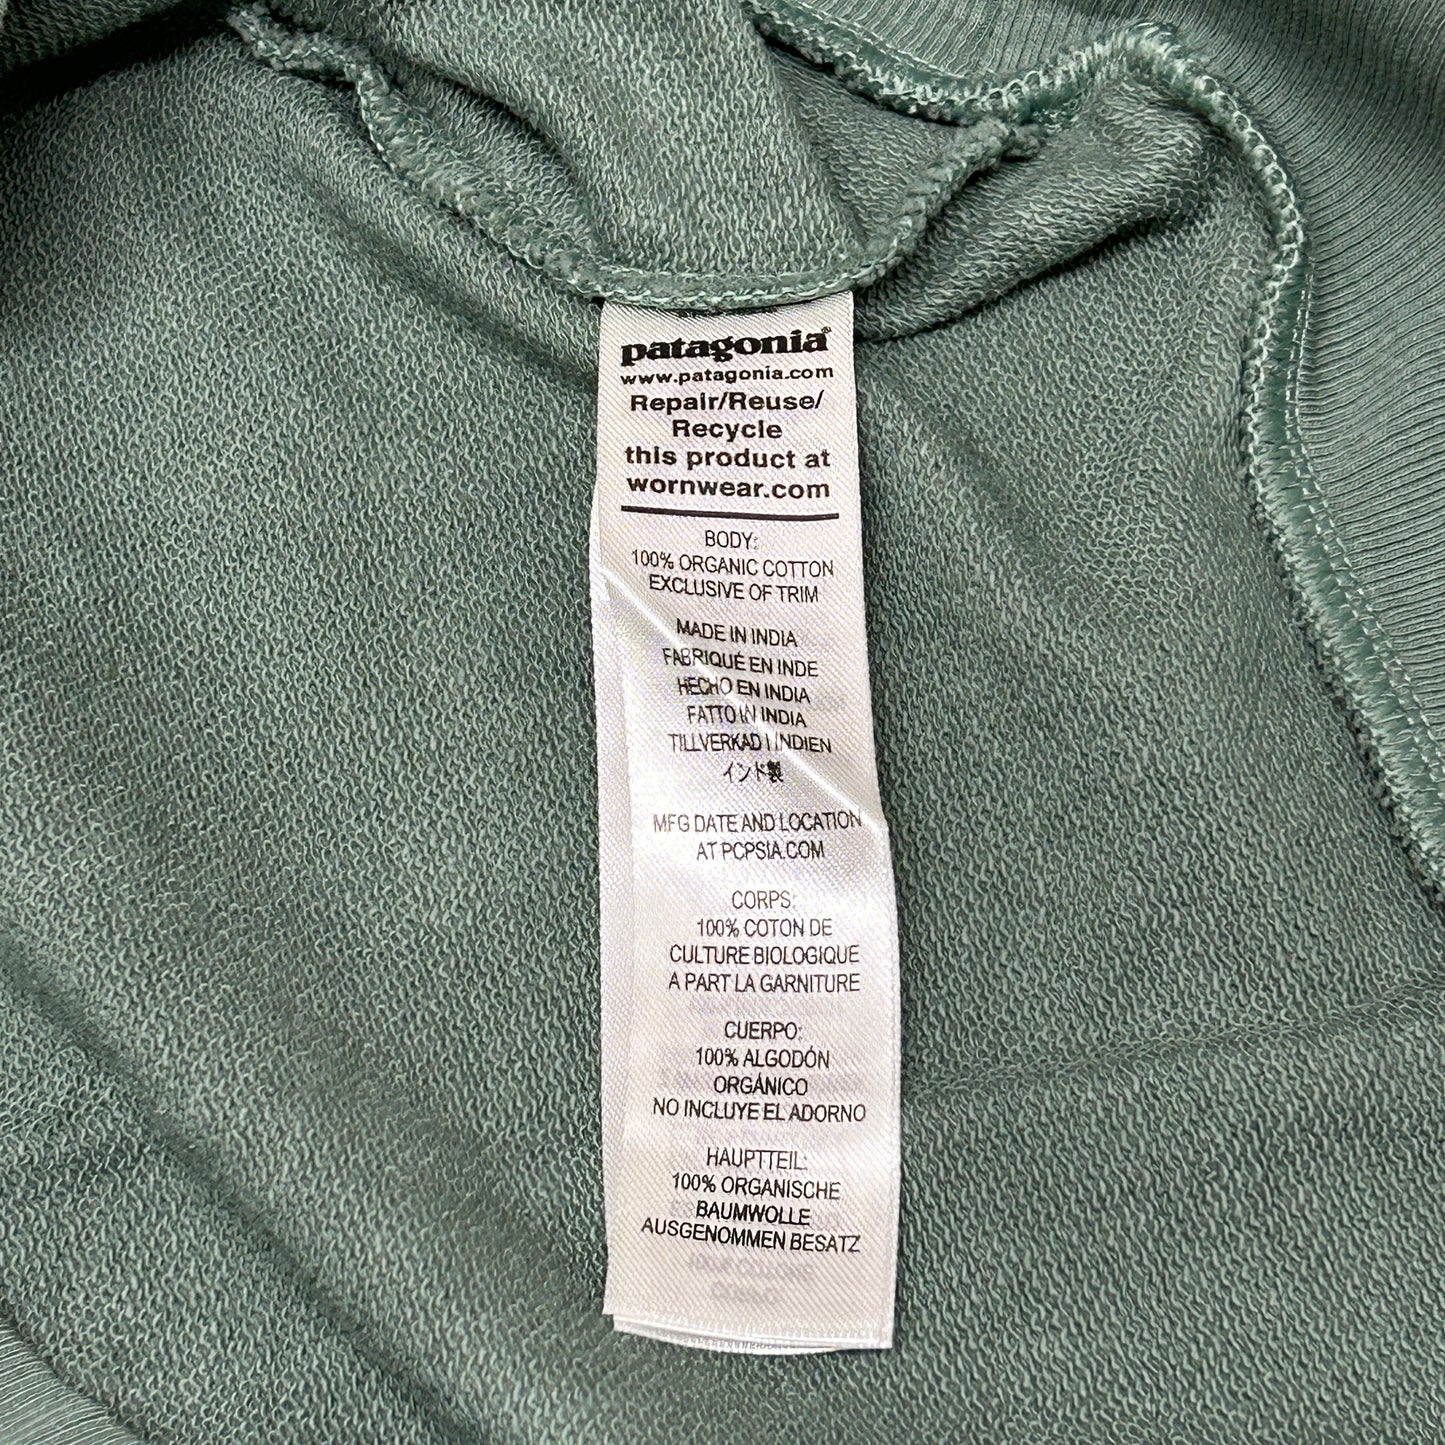 PATAGONIA Regenerative Organic Cotton Hoody Sweatshirt Sz S Hemlock Green (New)